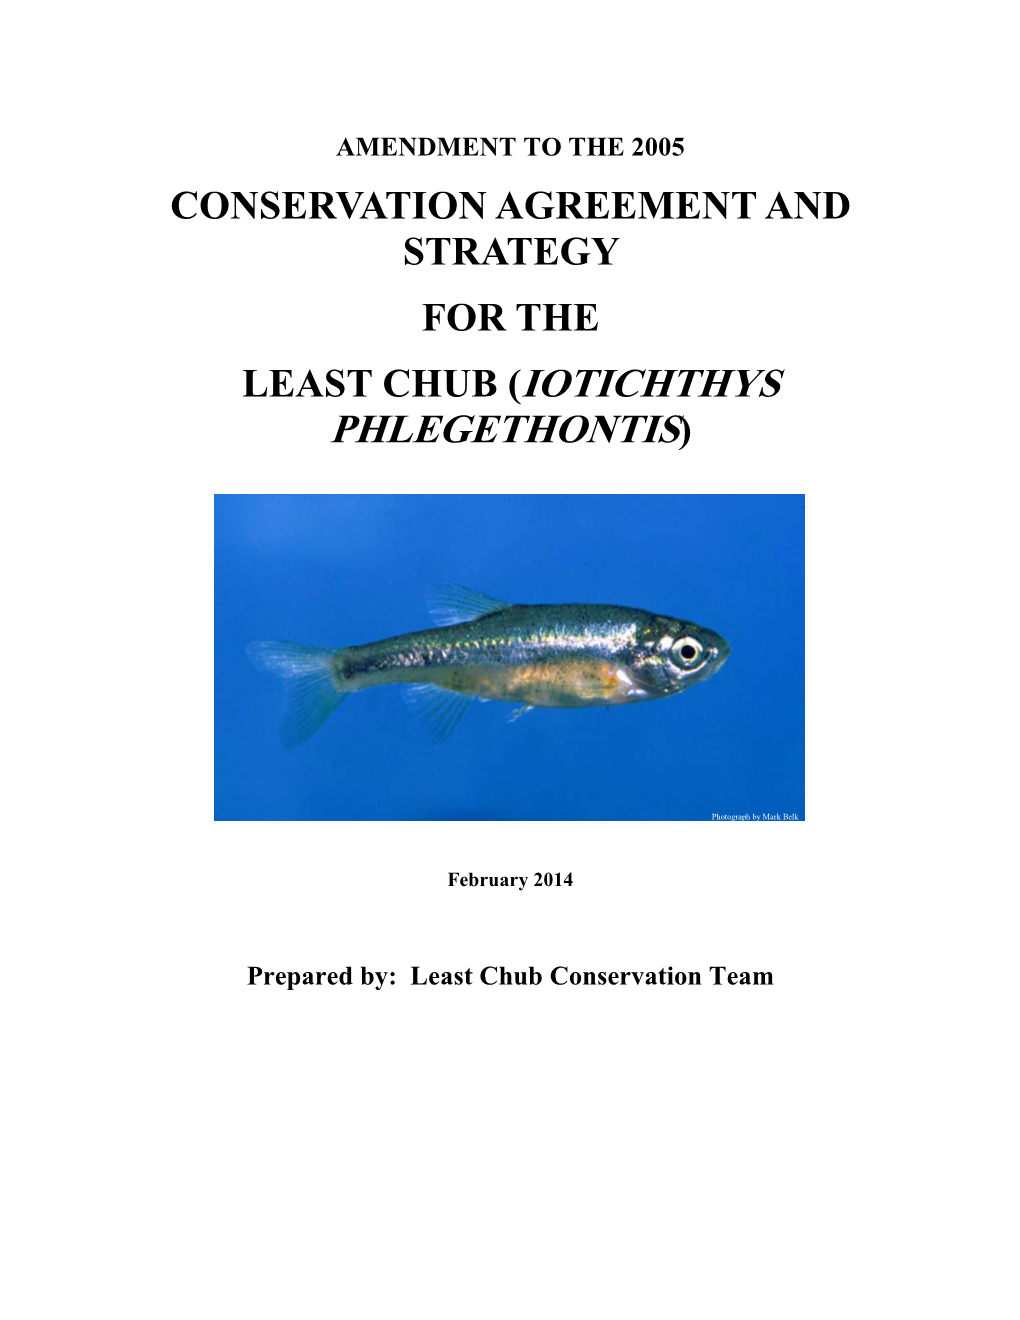 2014 Candidate Conservation Agreement Amendment